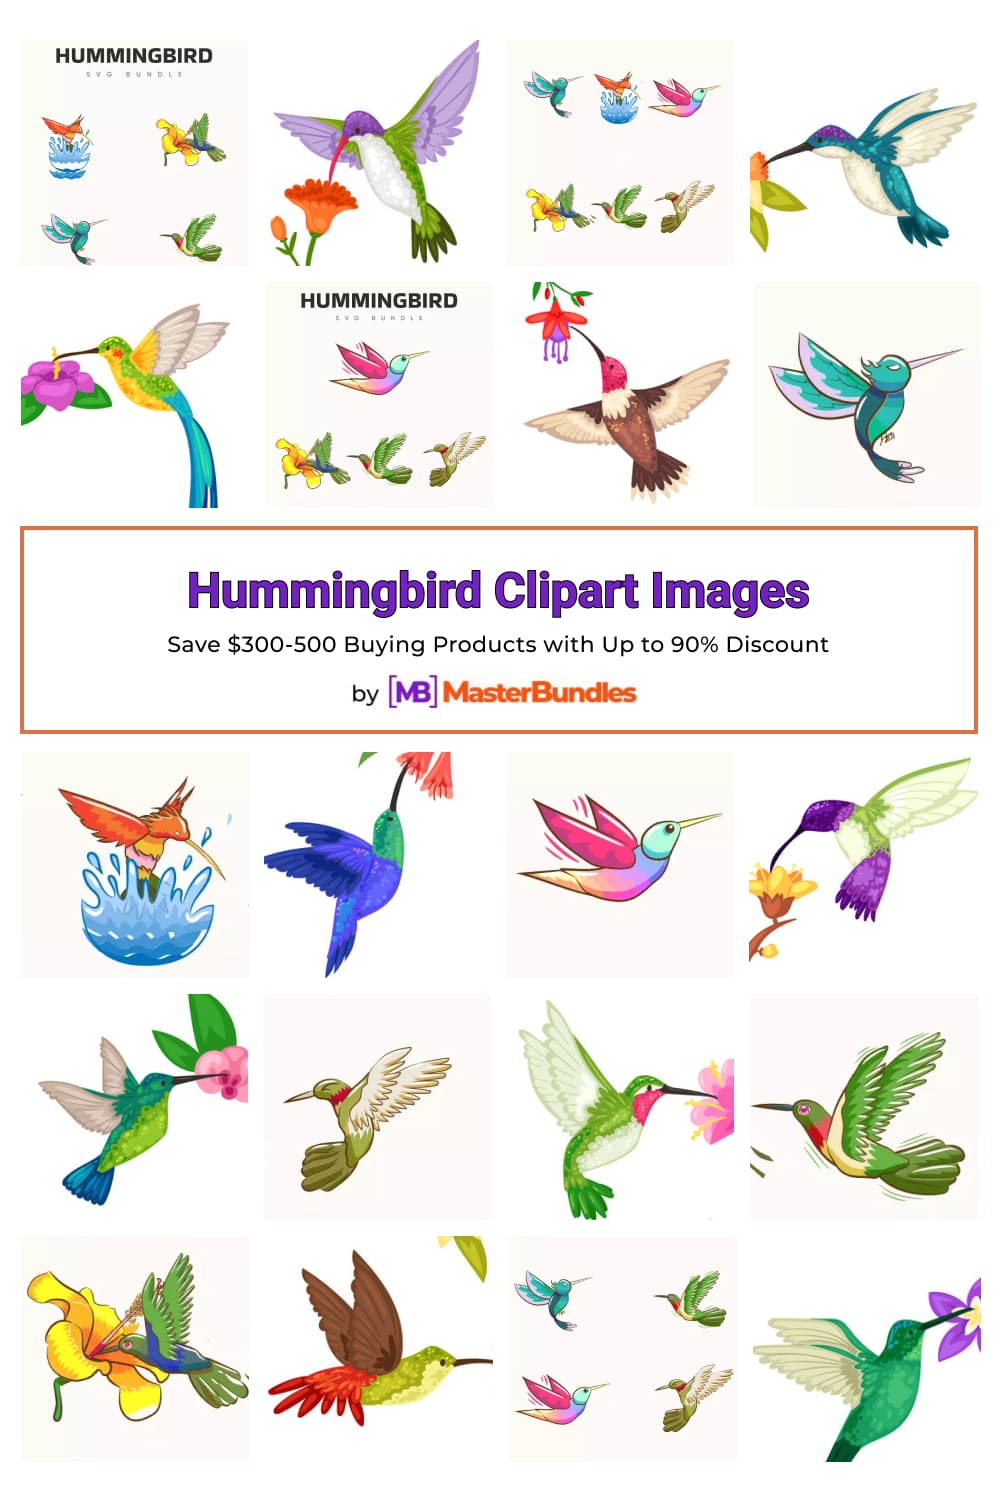 Hummingbird Clipart Images Pinterest image.